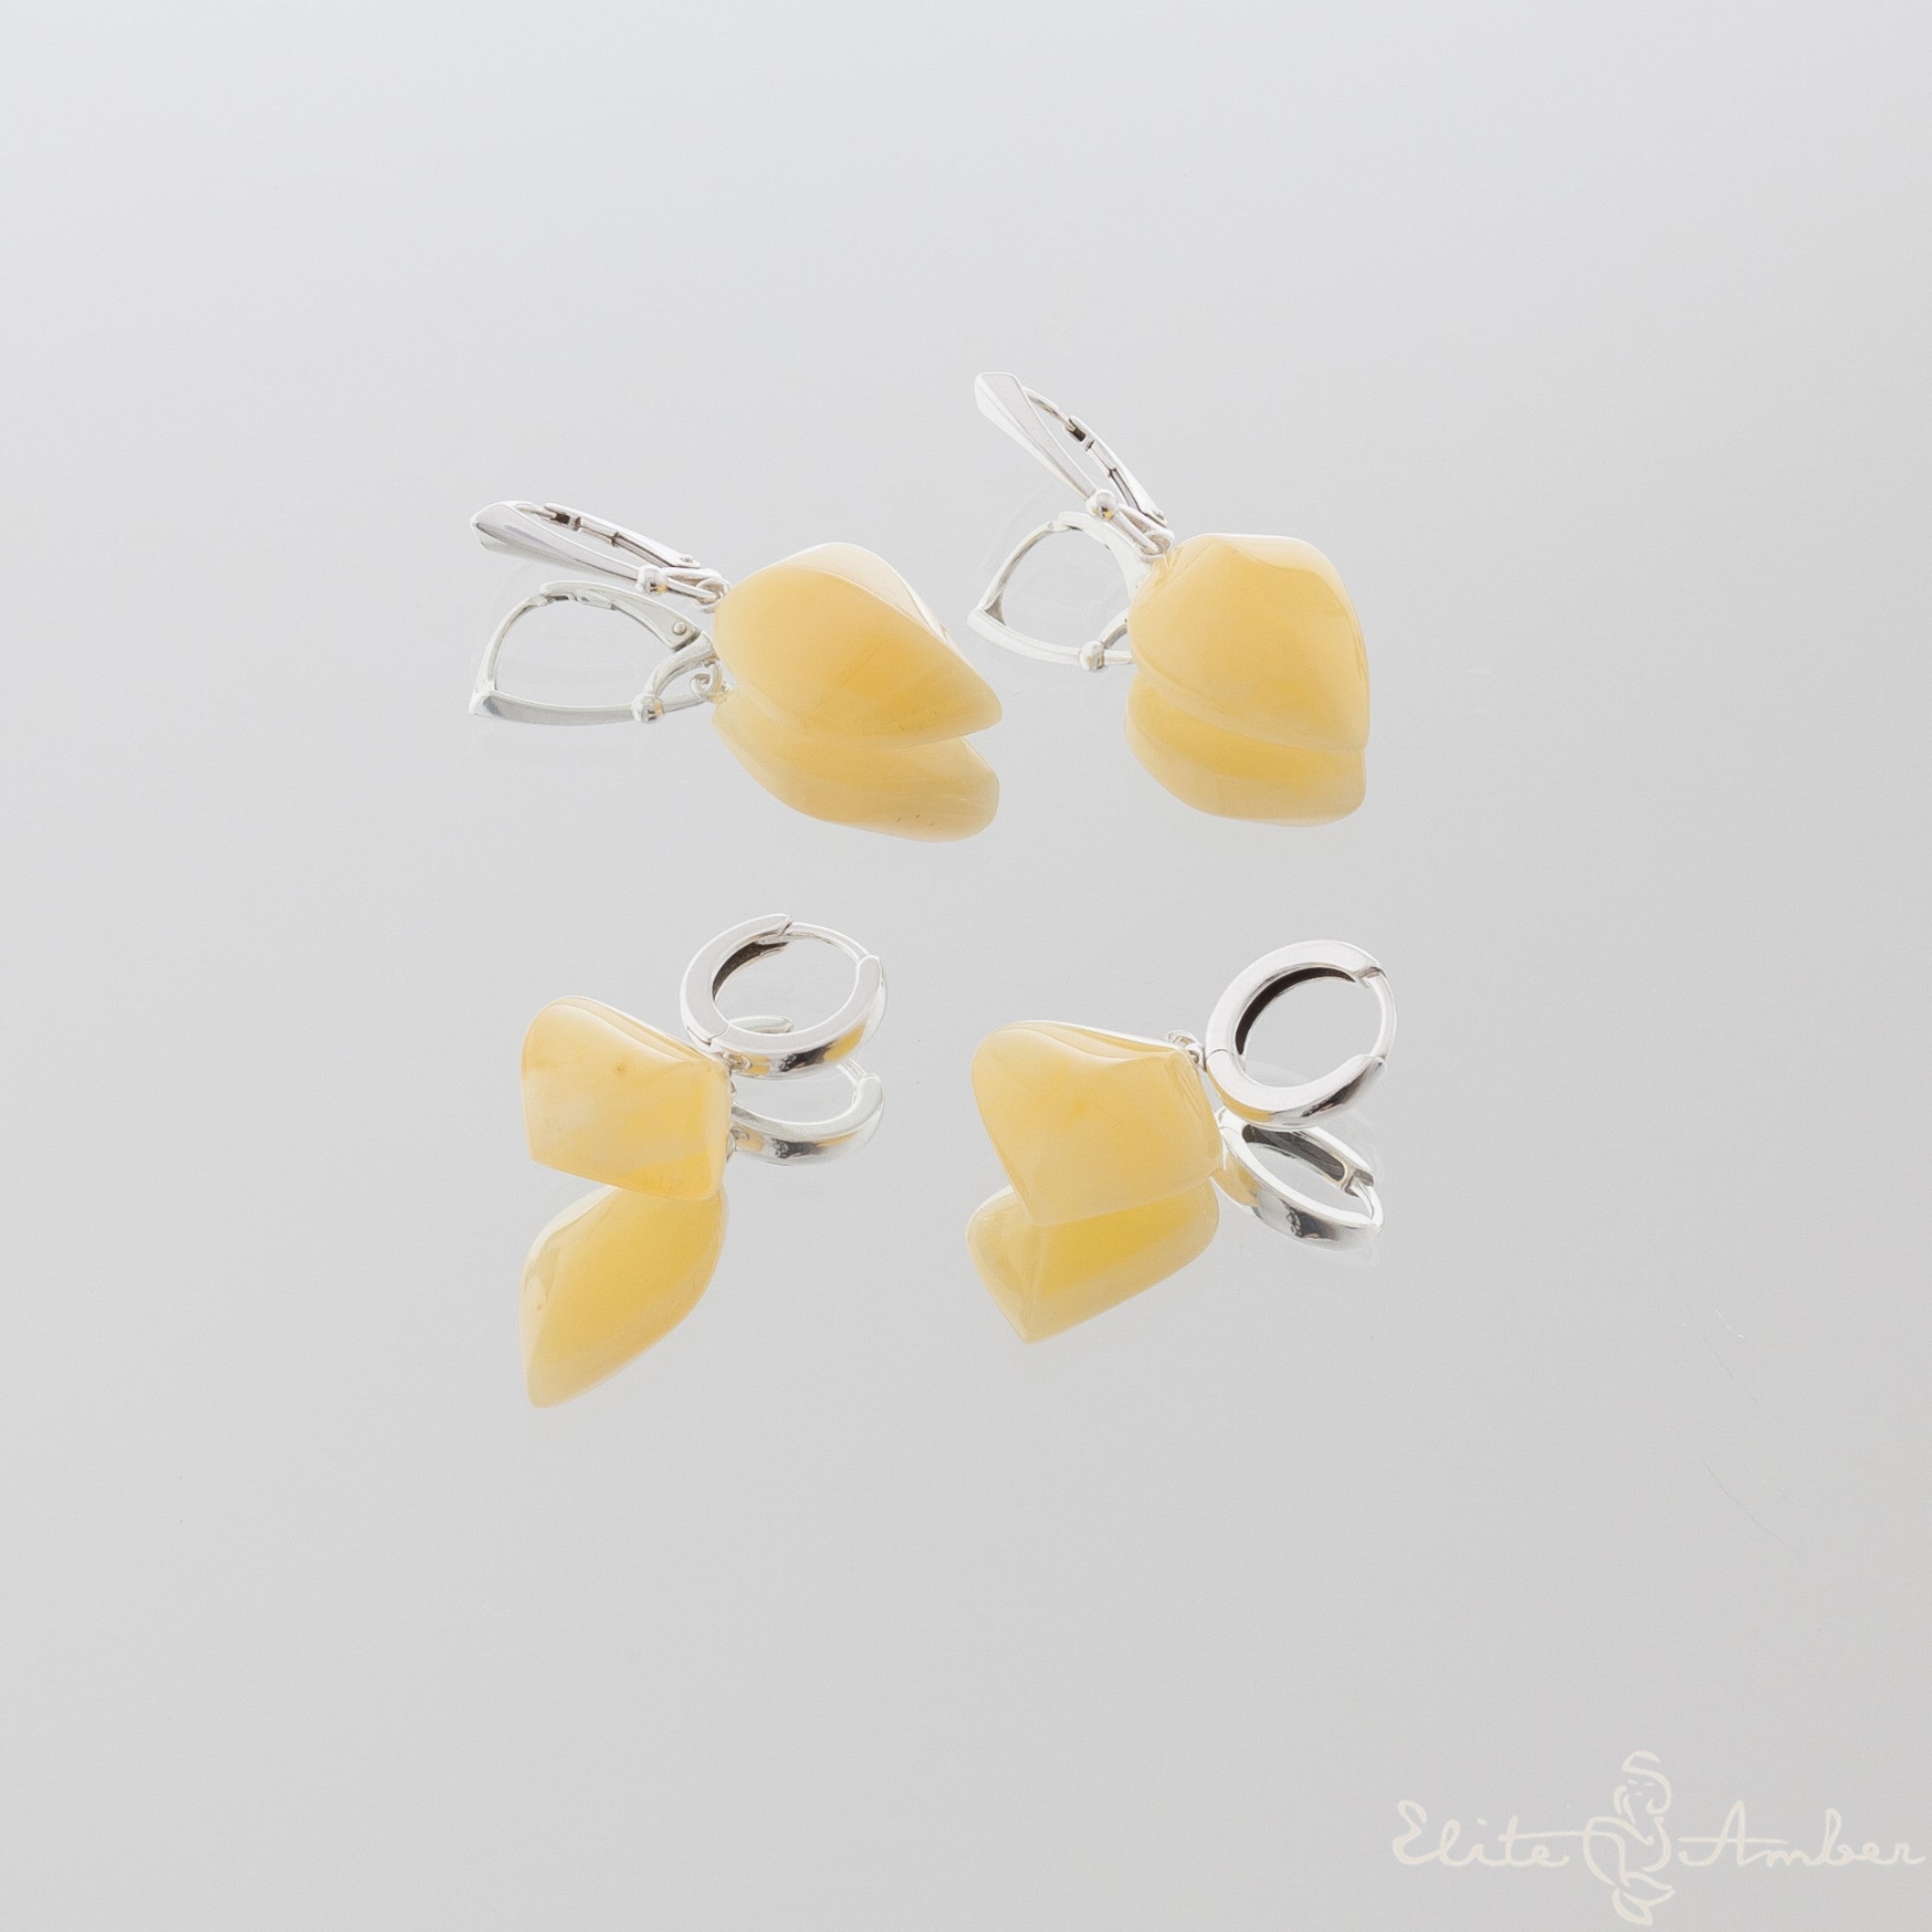 Amber earrings "Royal white leafs"